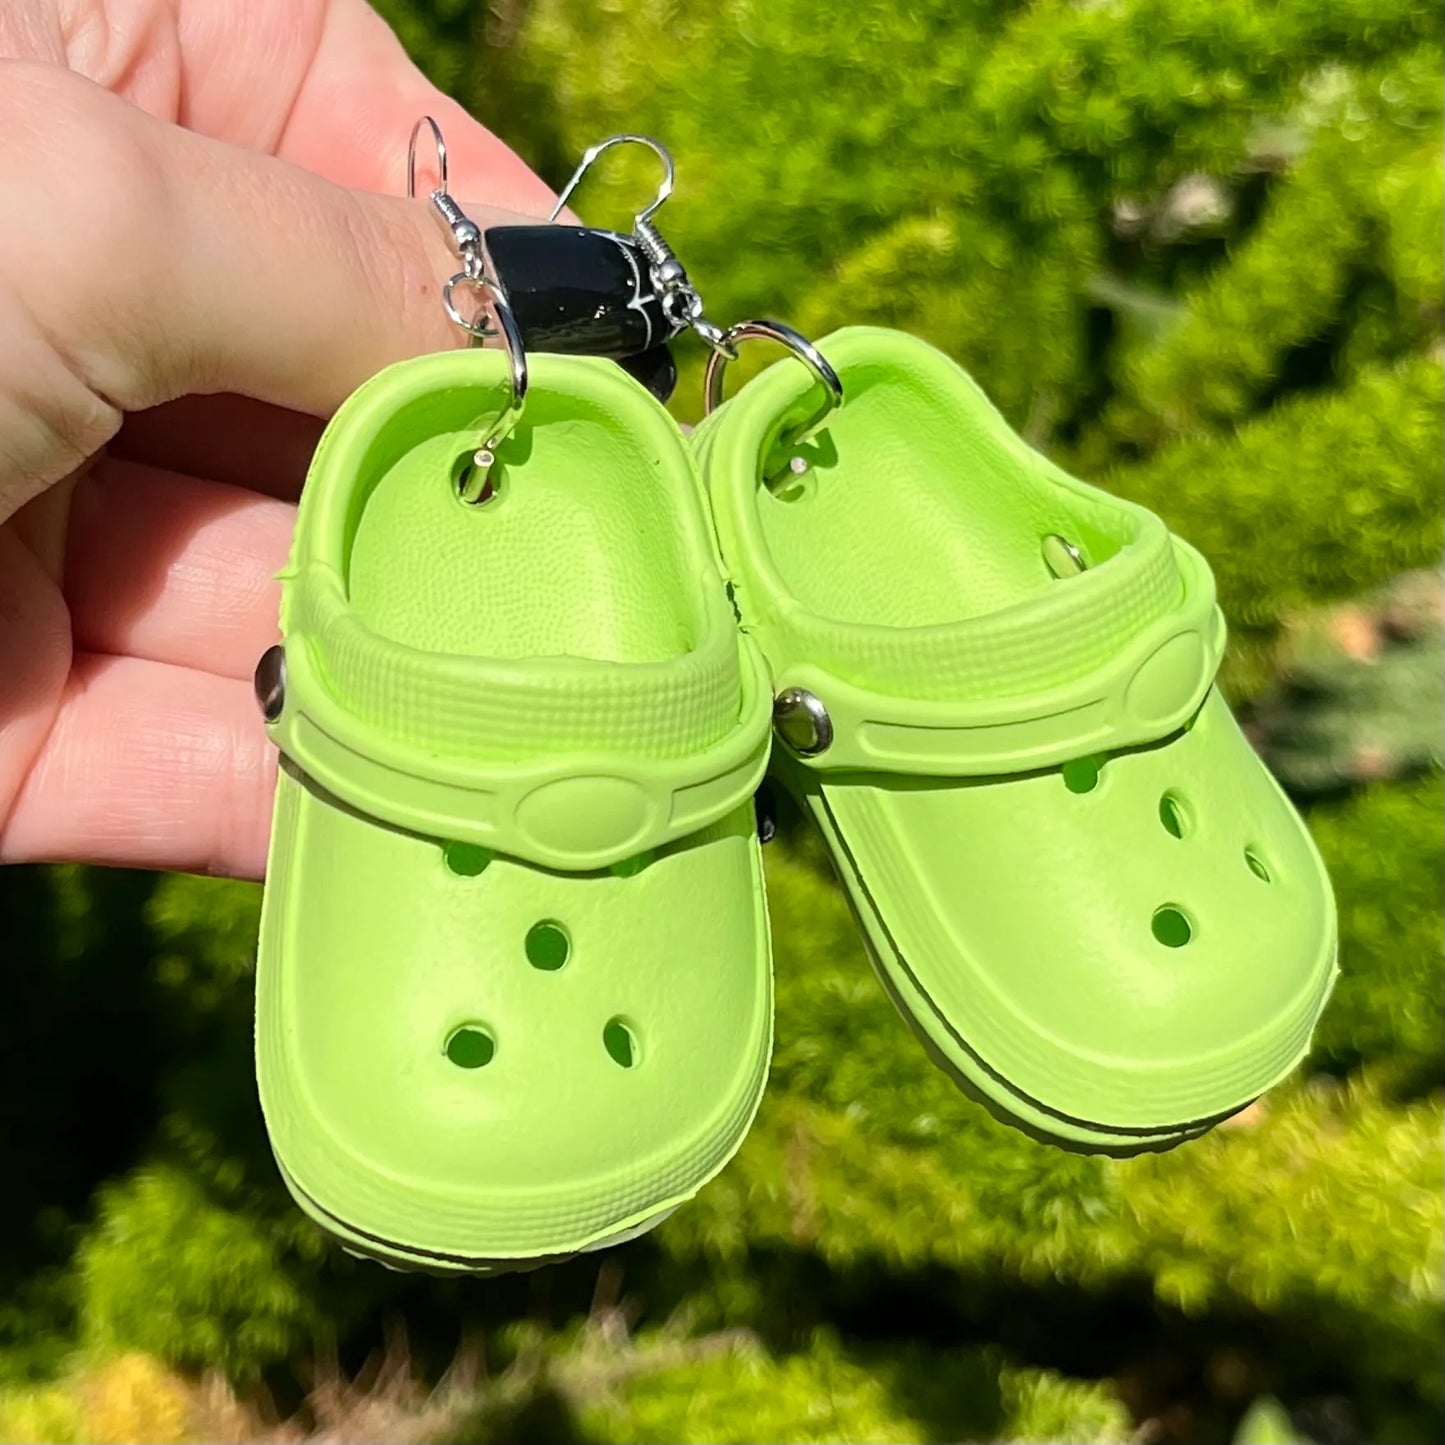 Tiny Clog Shoe Earrings